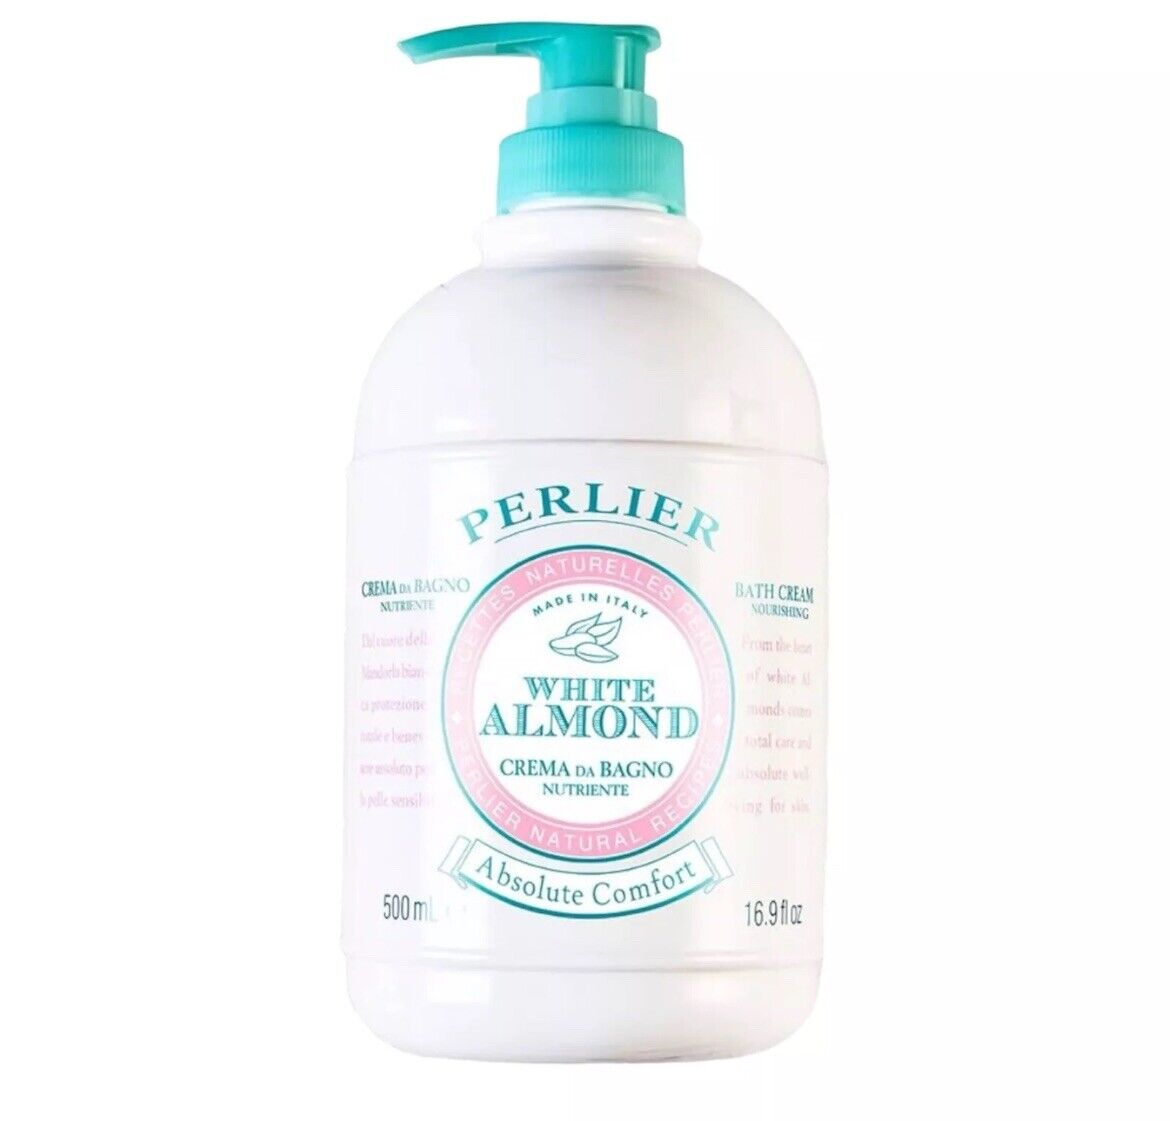 Perlier White Almond Absolute Comfort Bath Cream 16.9 fl oz.